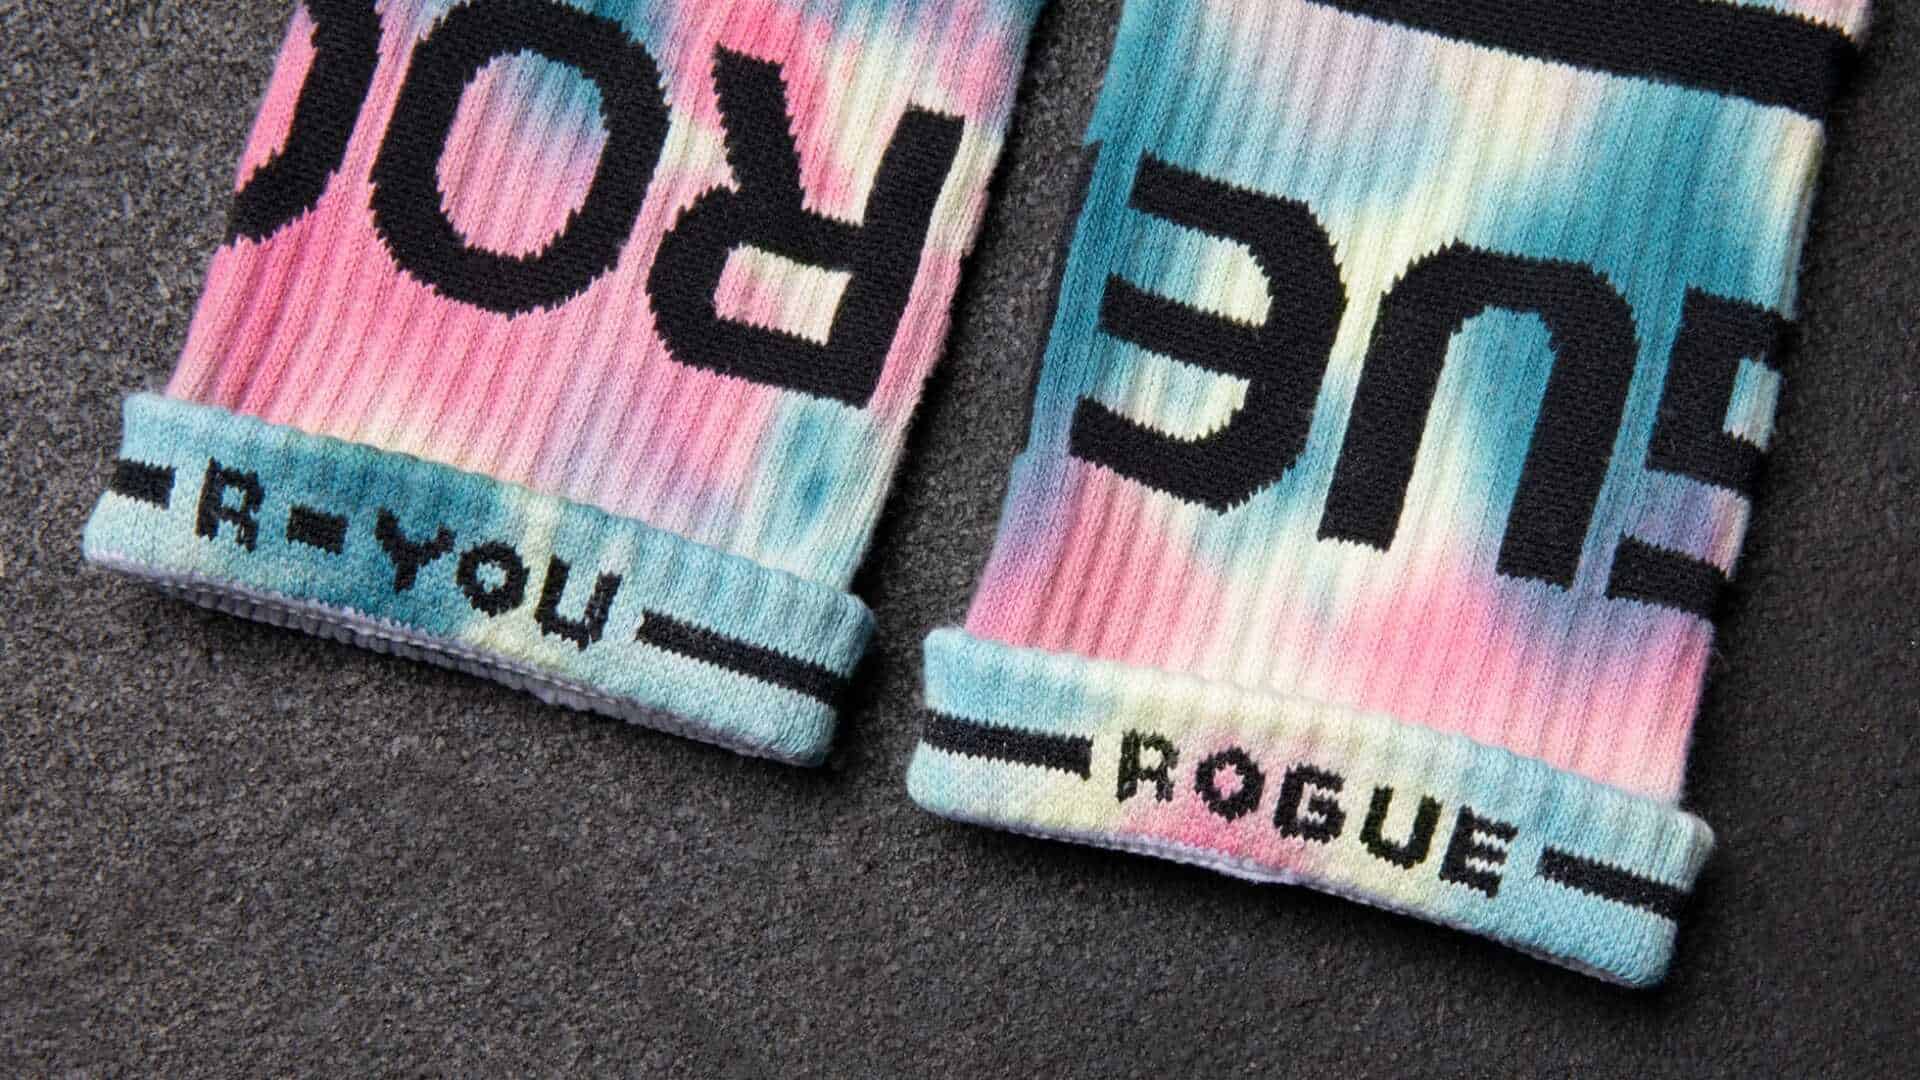 Rogue Wrist Bands - Tie Dye details